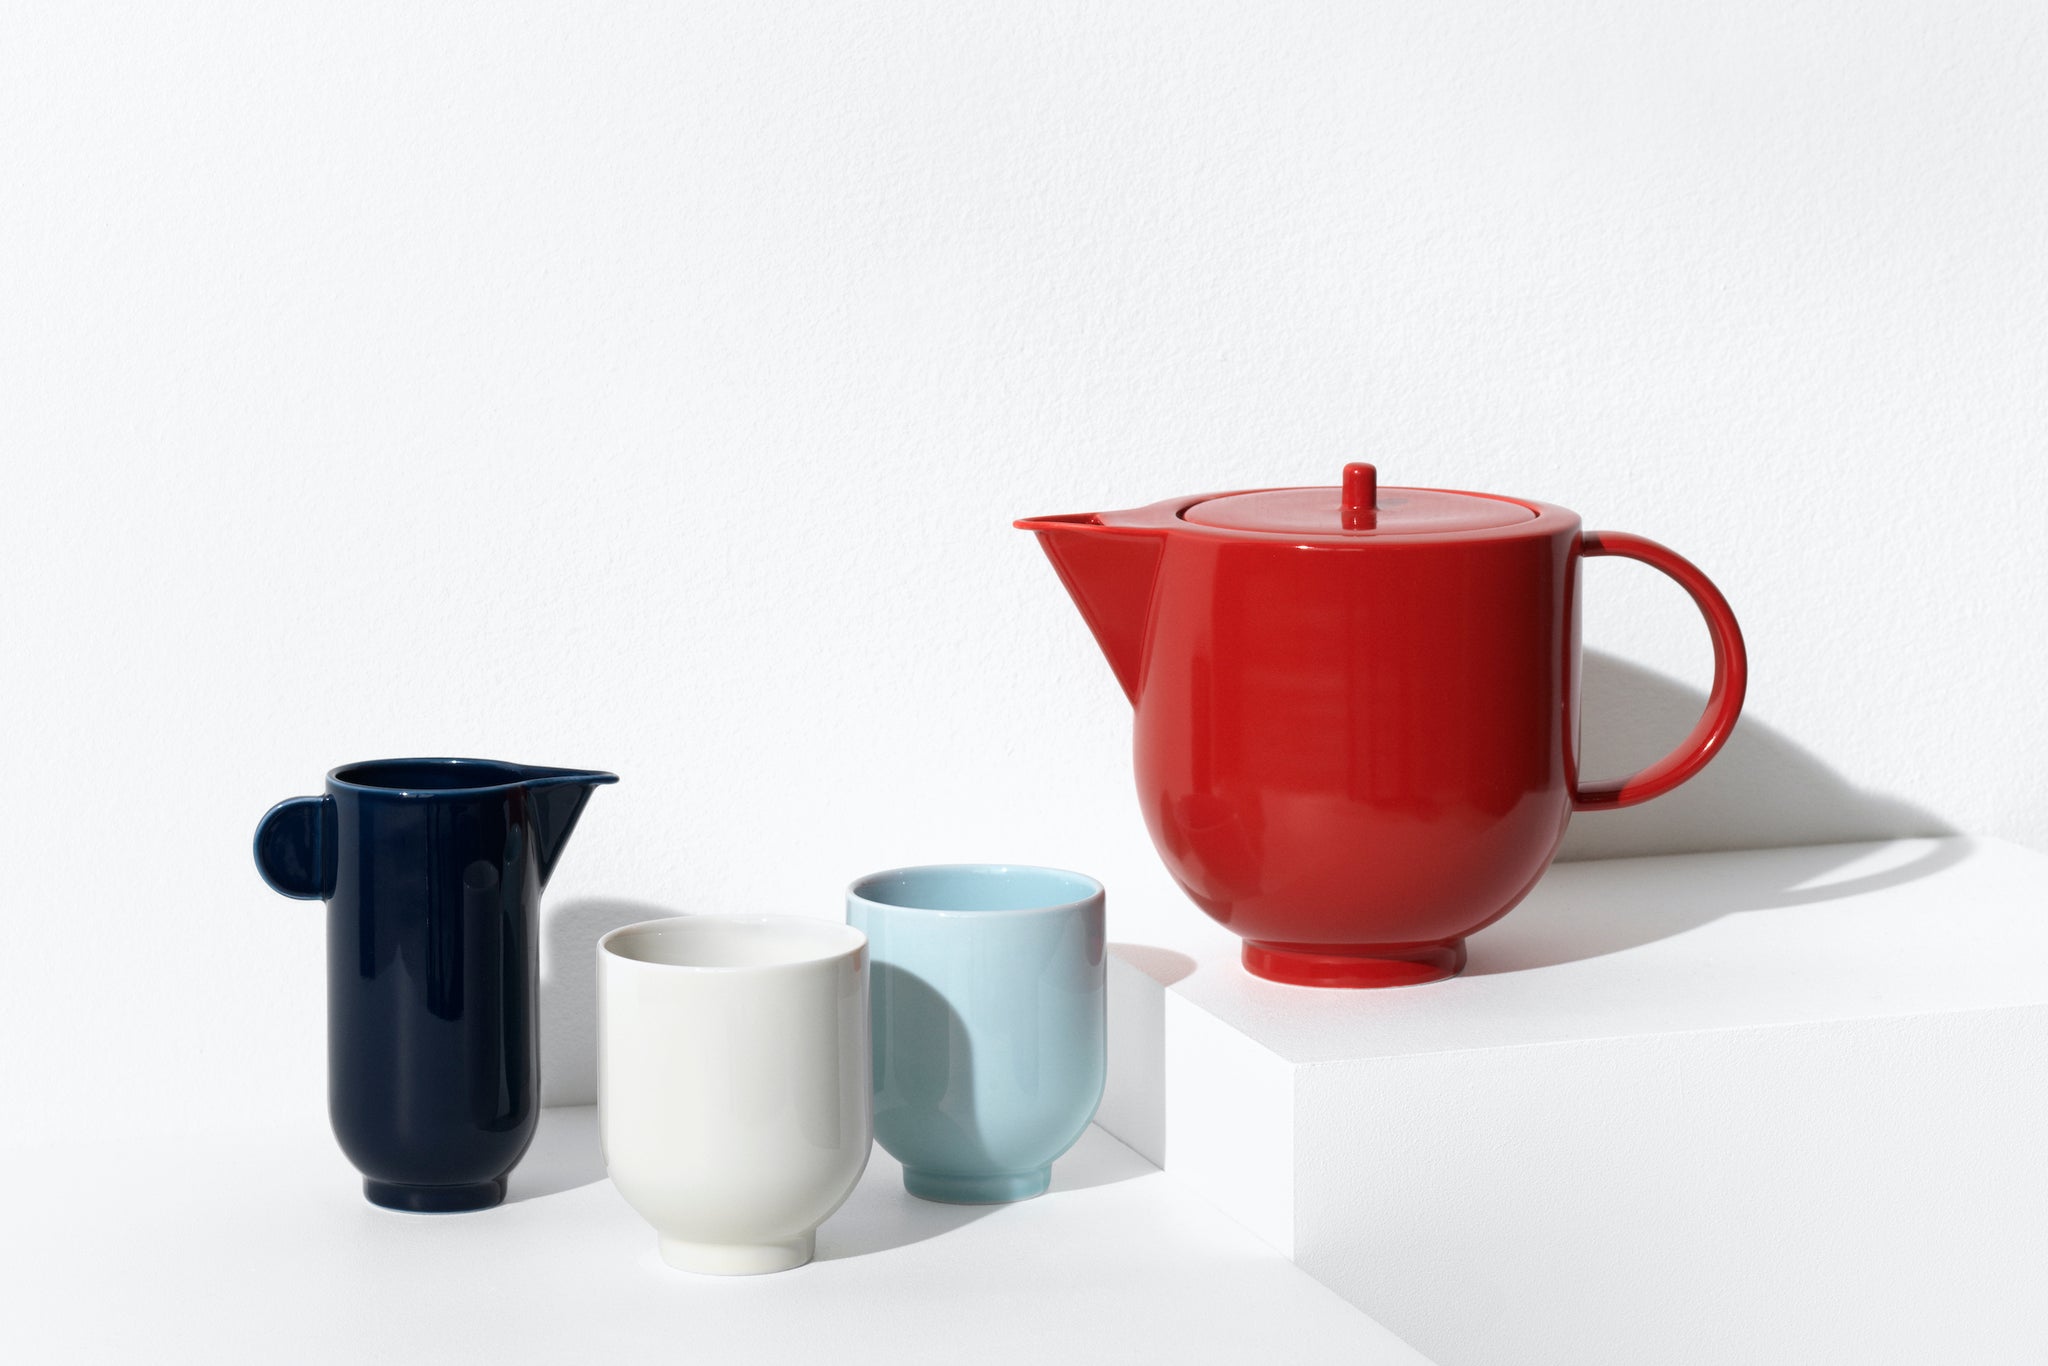 Yoko tableware collection designed by Stilleben for Motarasu.